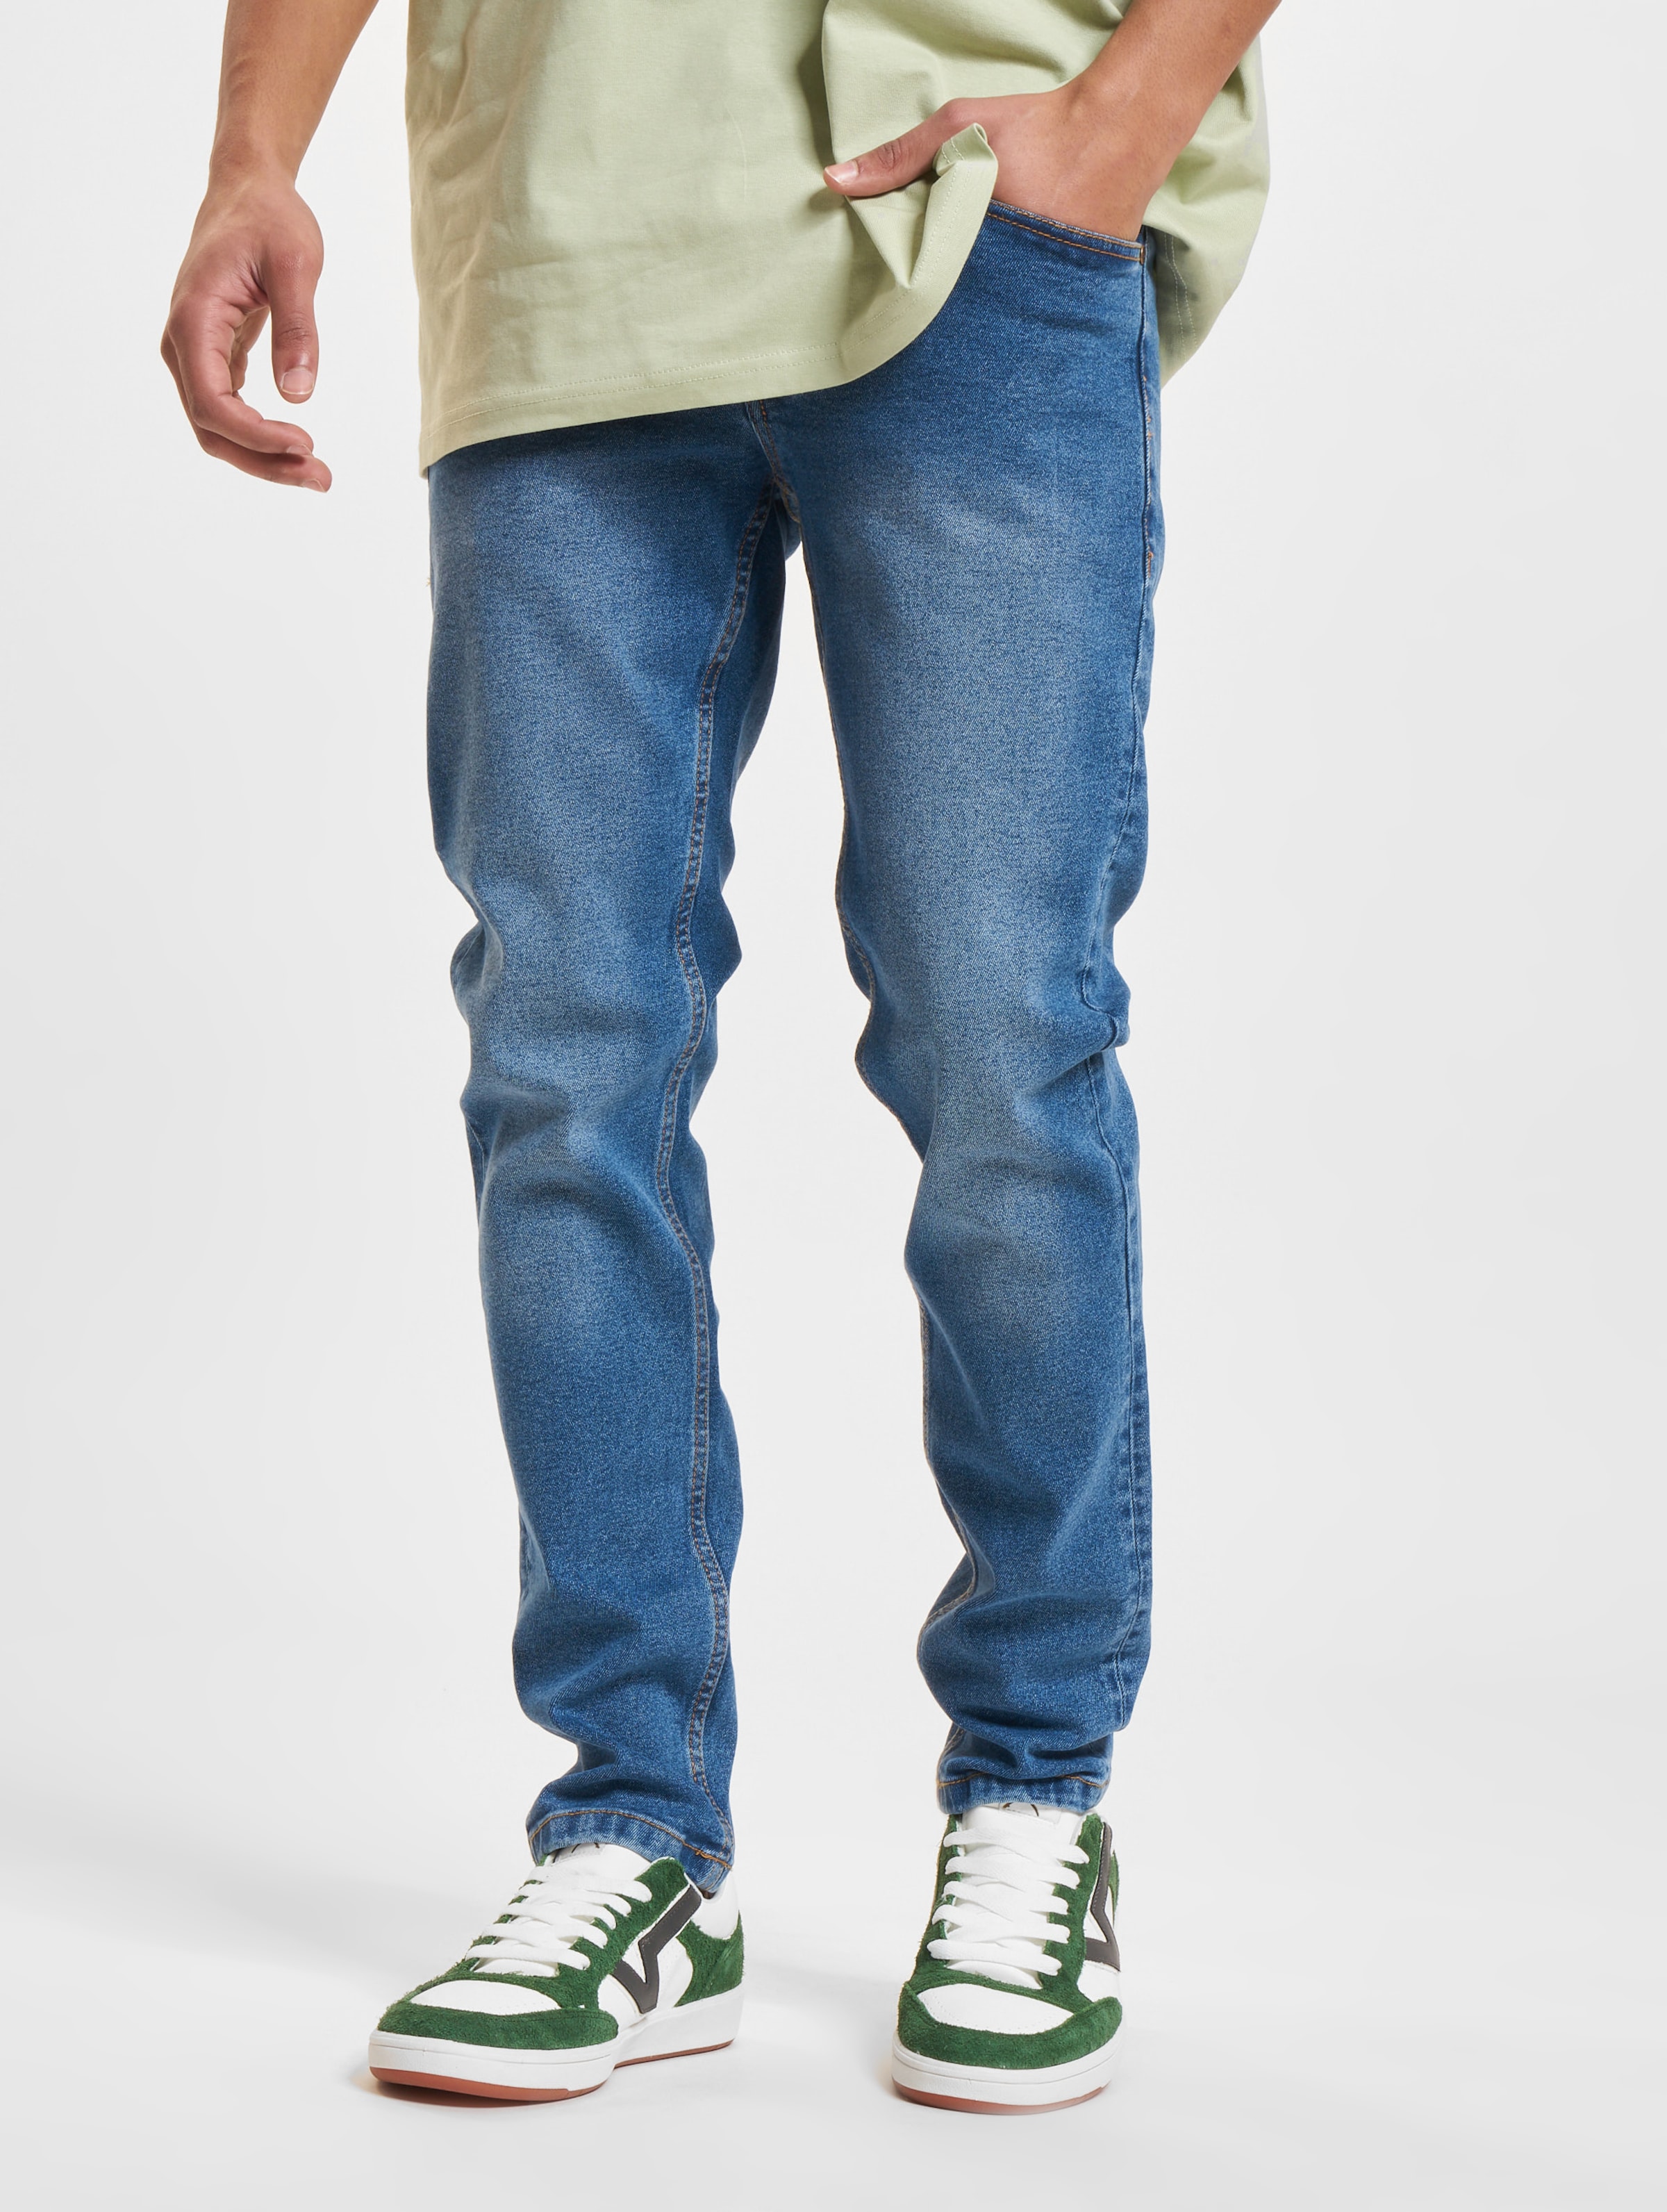 Denim Project Mr. Red Skinny Fit Jeans Mannen op kleur blauw, Maat 3334